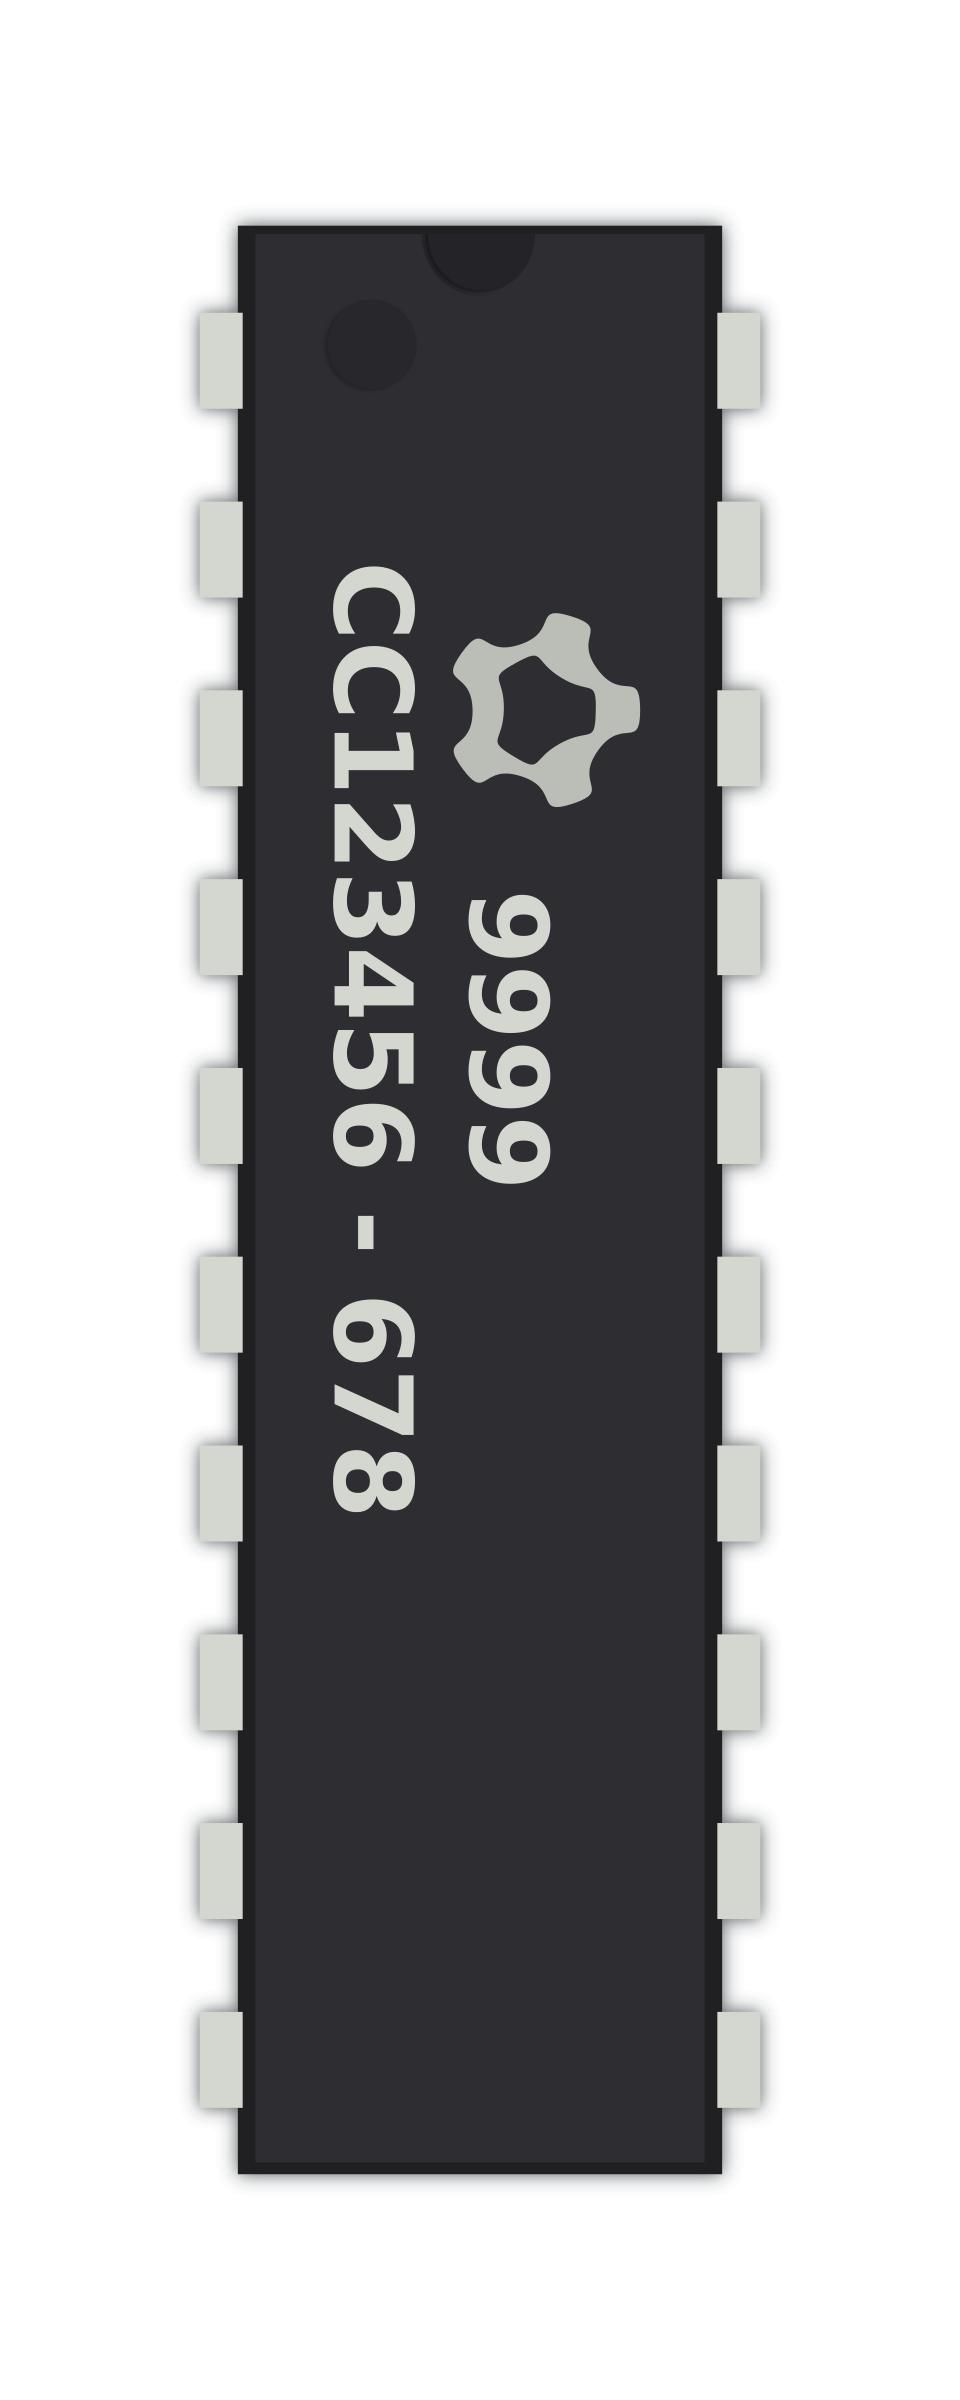 Generic 20-pin IC icons